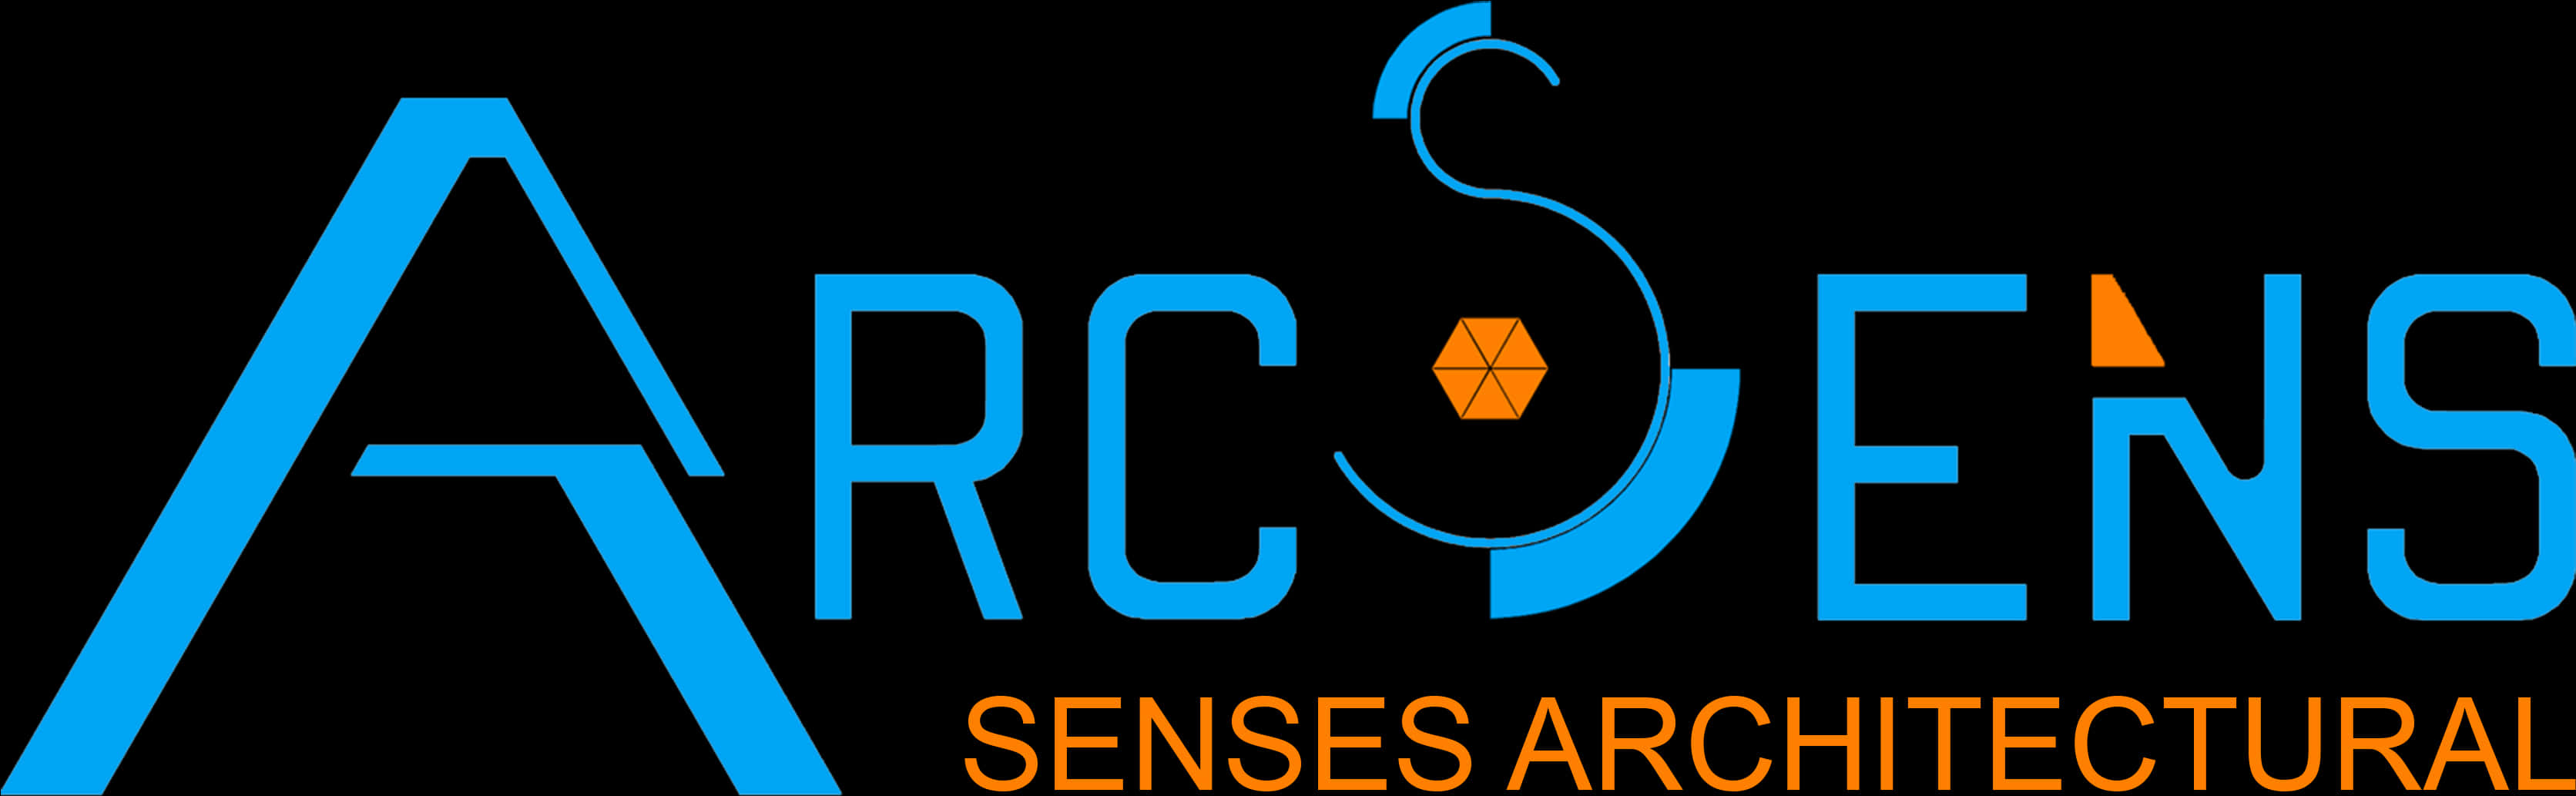 Arc Sens Logo Design PNG